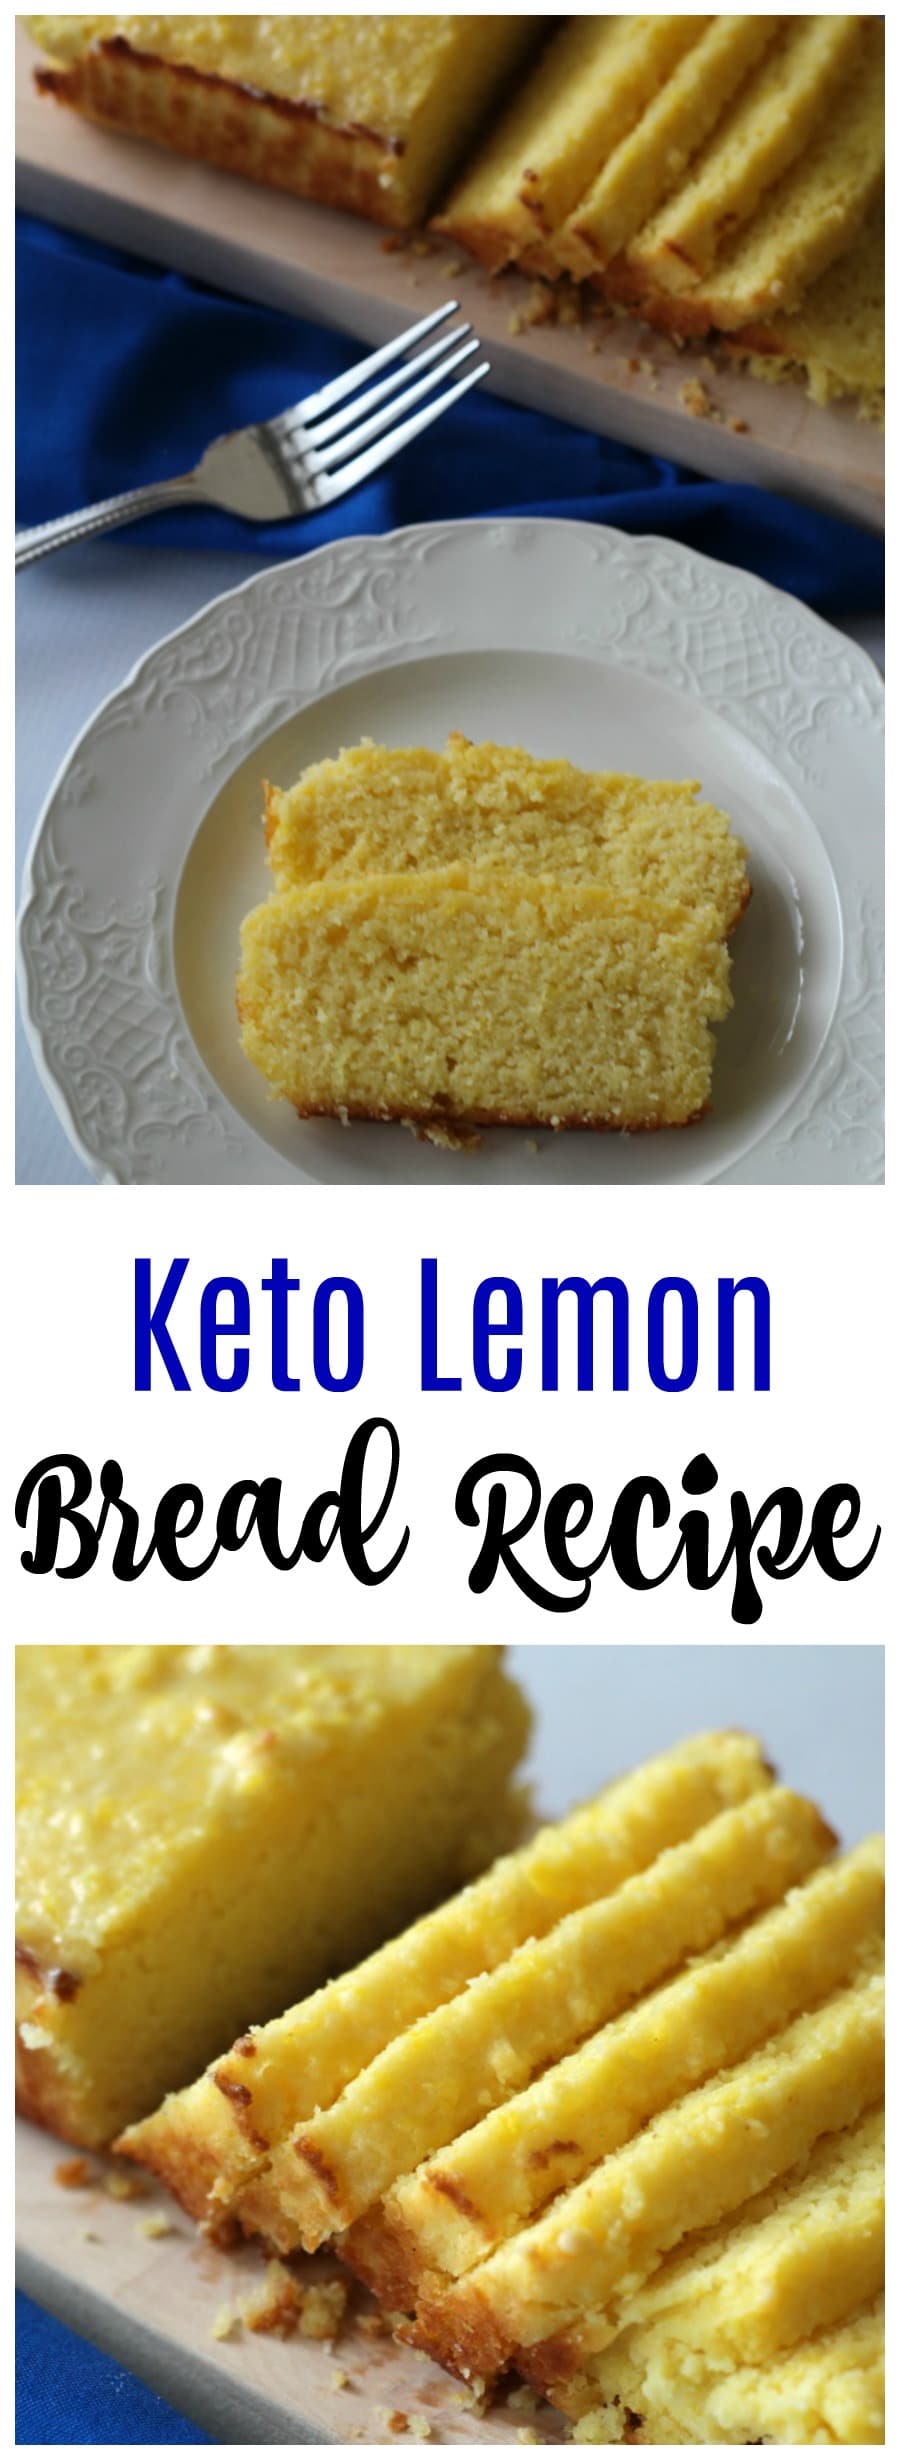 Keto Lemon Bread Recipe: Perfectly Moist & Delicious | Kasey Trenum ...